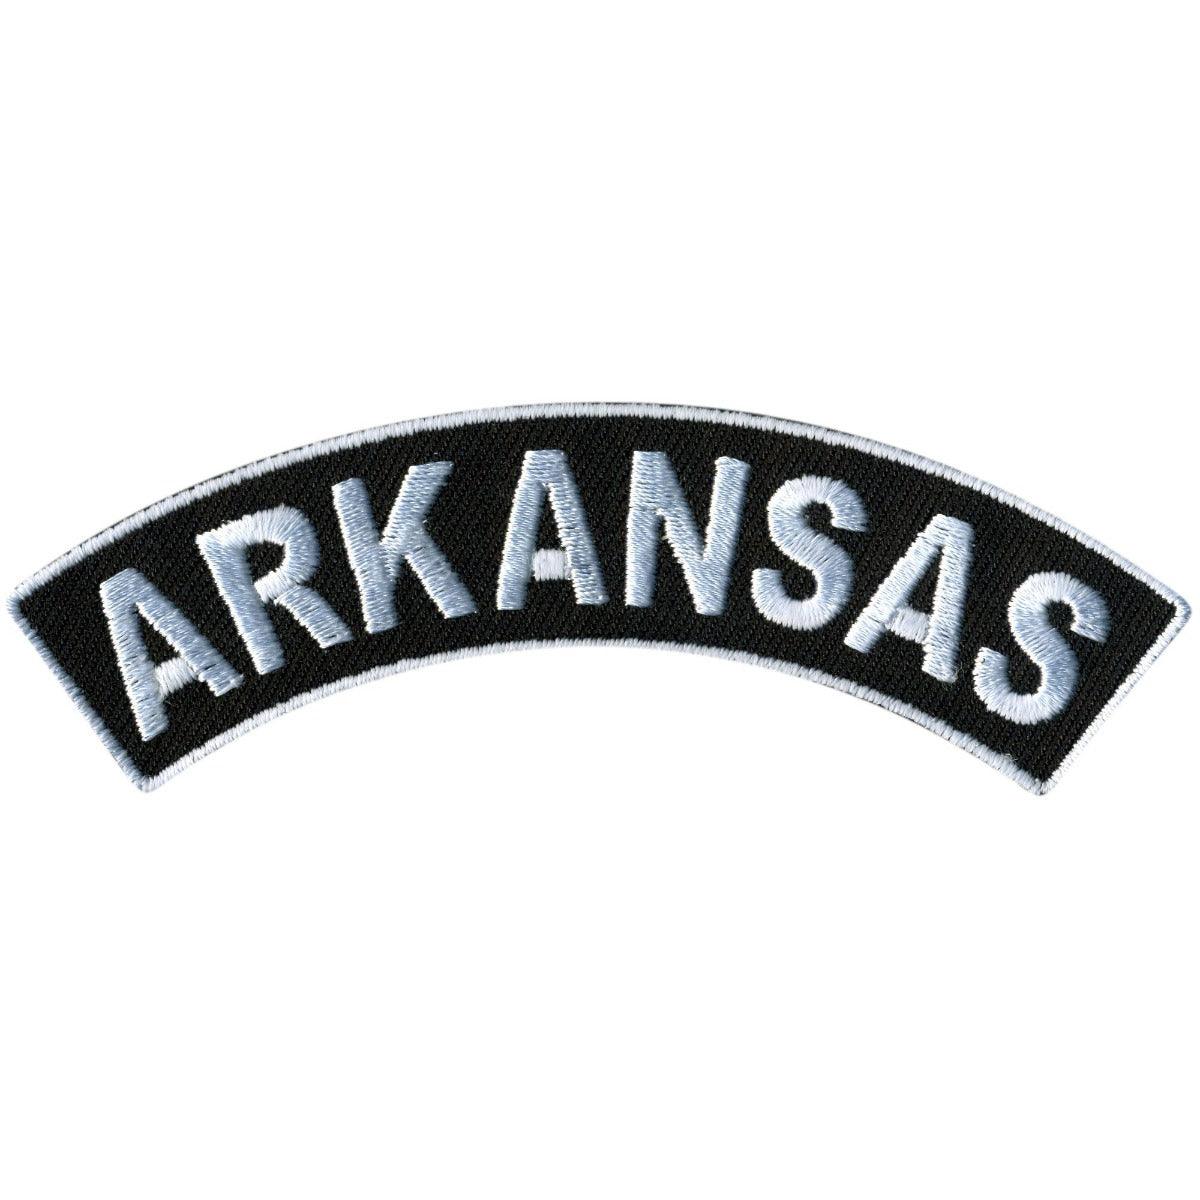 Hot Leathers Arkansas 4” X 1” Top Rocker Patch - American Legend Rider